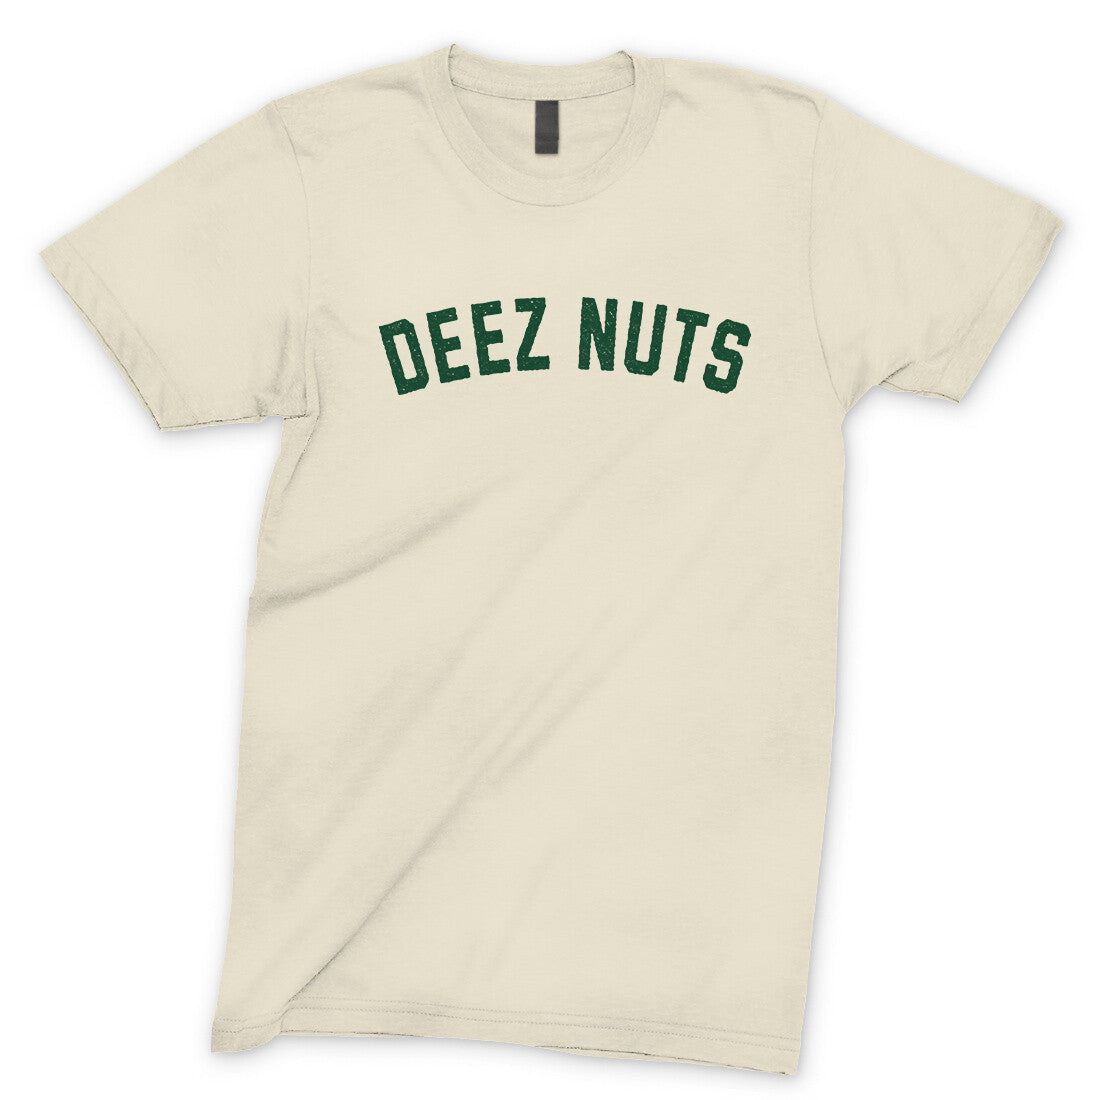 Deez Nuts in Natural Color